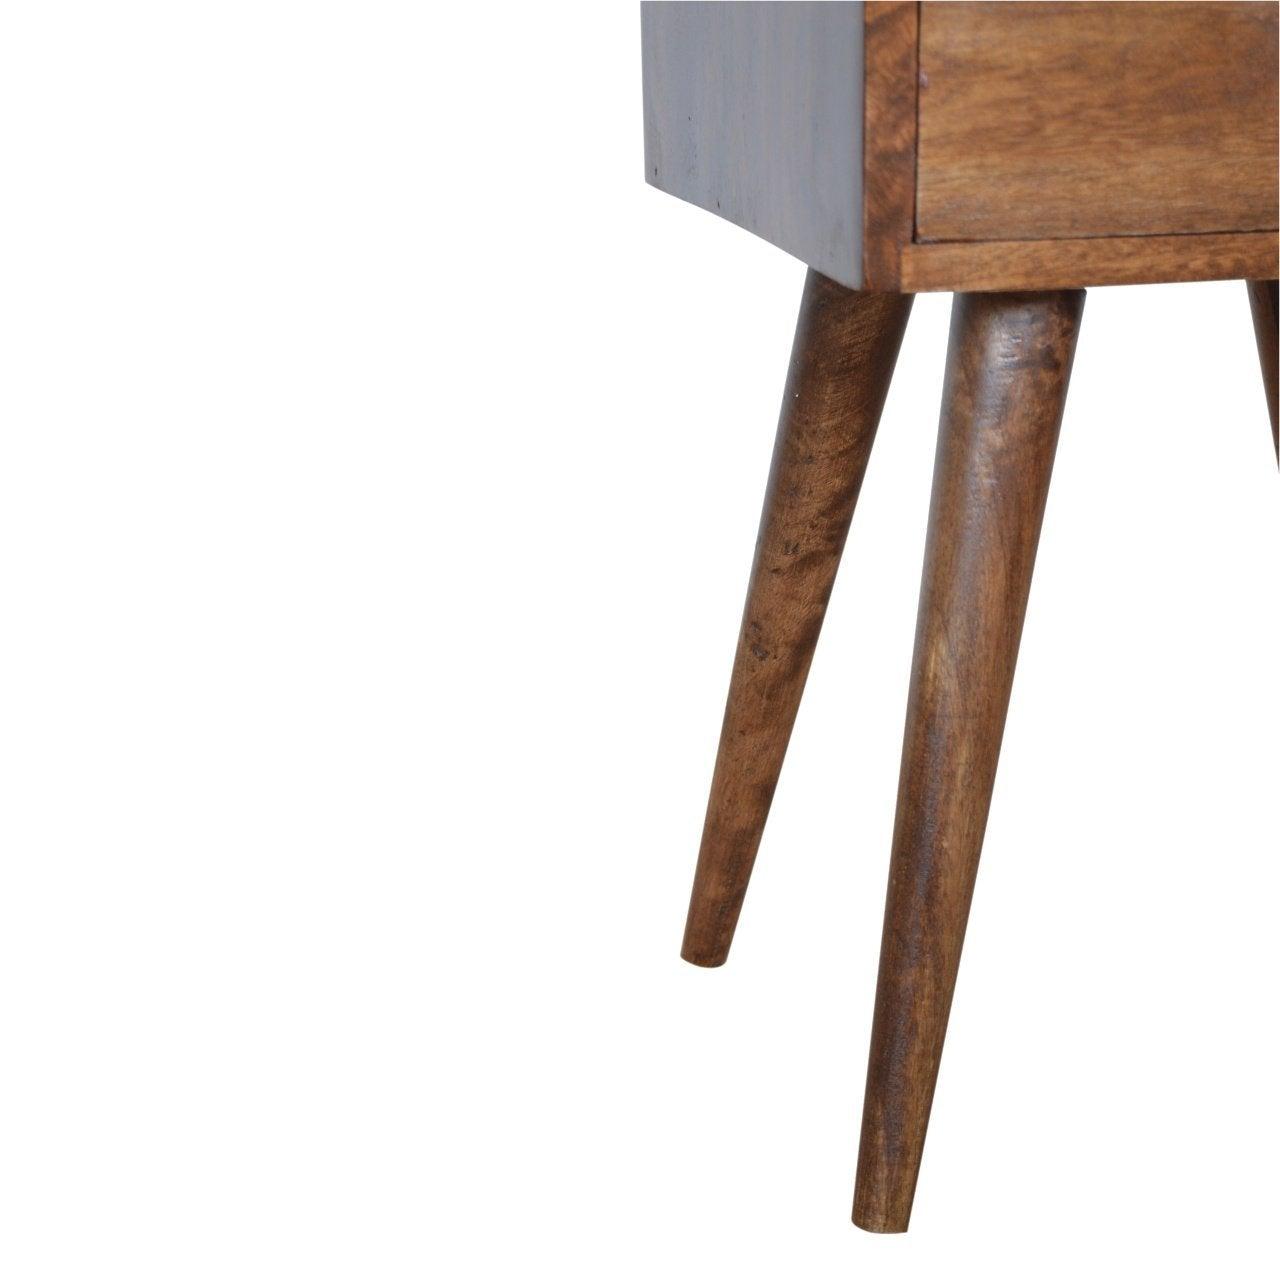 Petite light walnut finish bedside table - crimblefest furniture - image 8